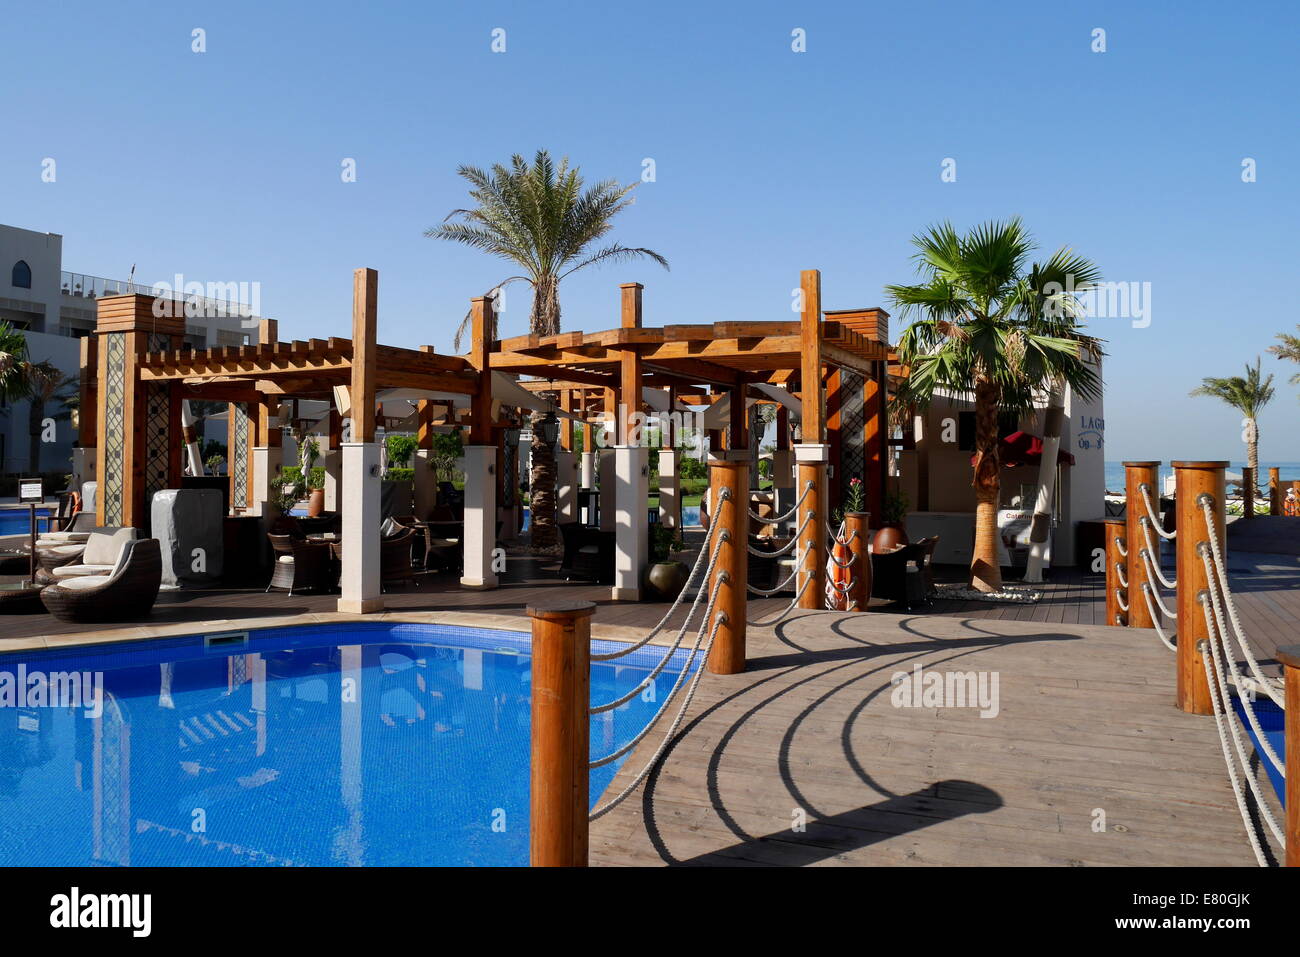 Pool bar and swimming pool at the beach resort of the Hotel Sofitel, Zallaq, Kingdom of Bahrain Stock Photo